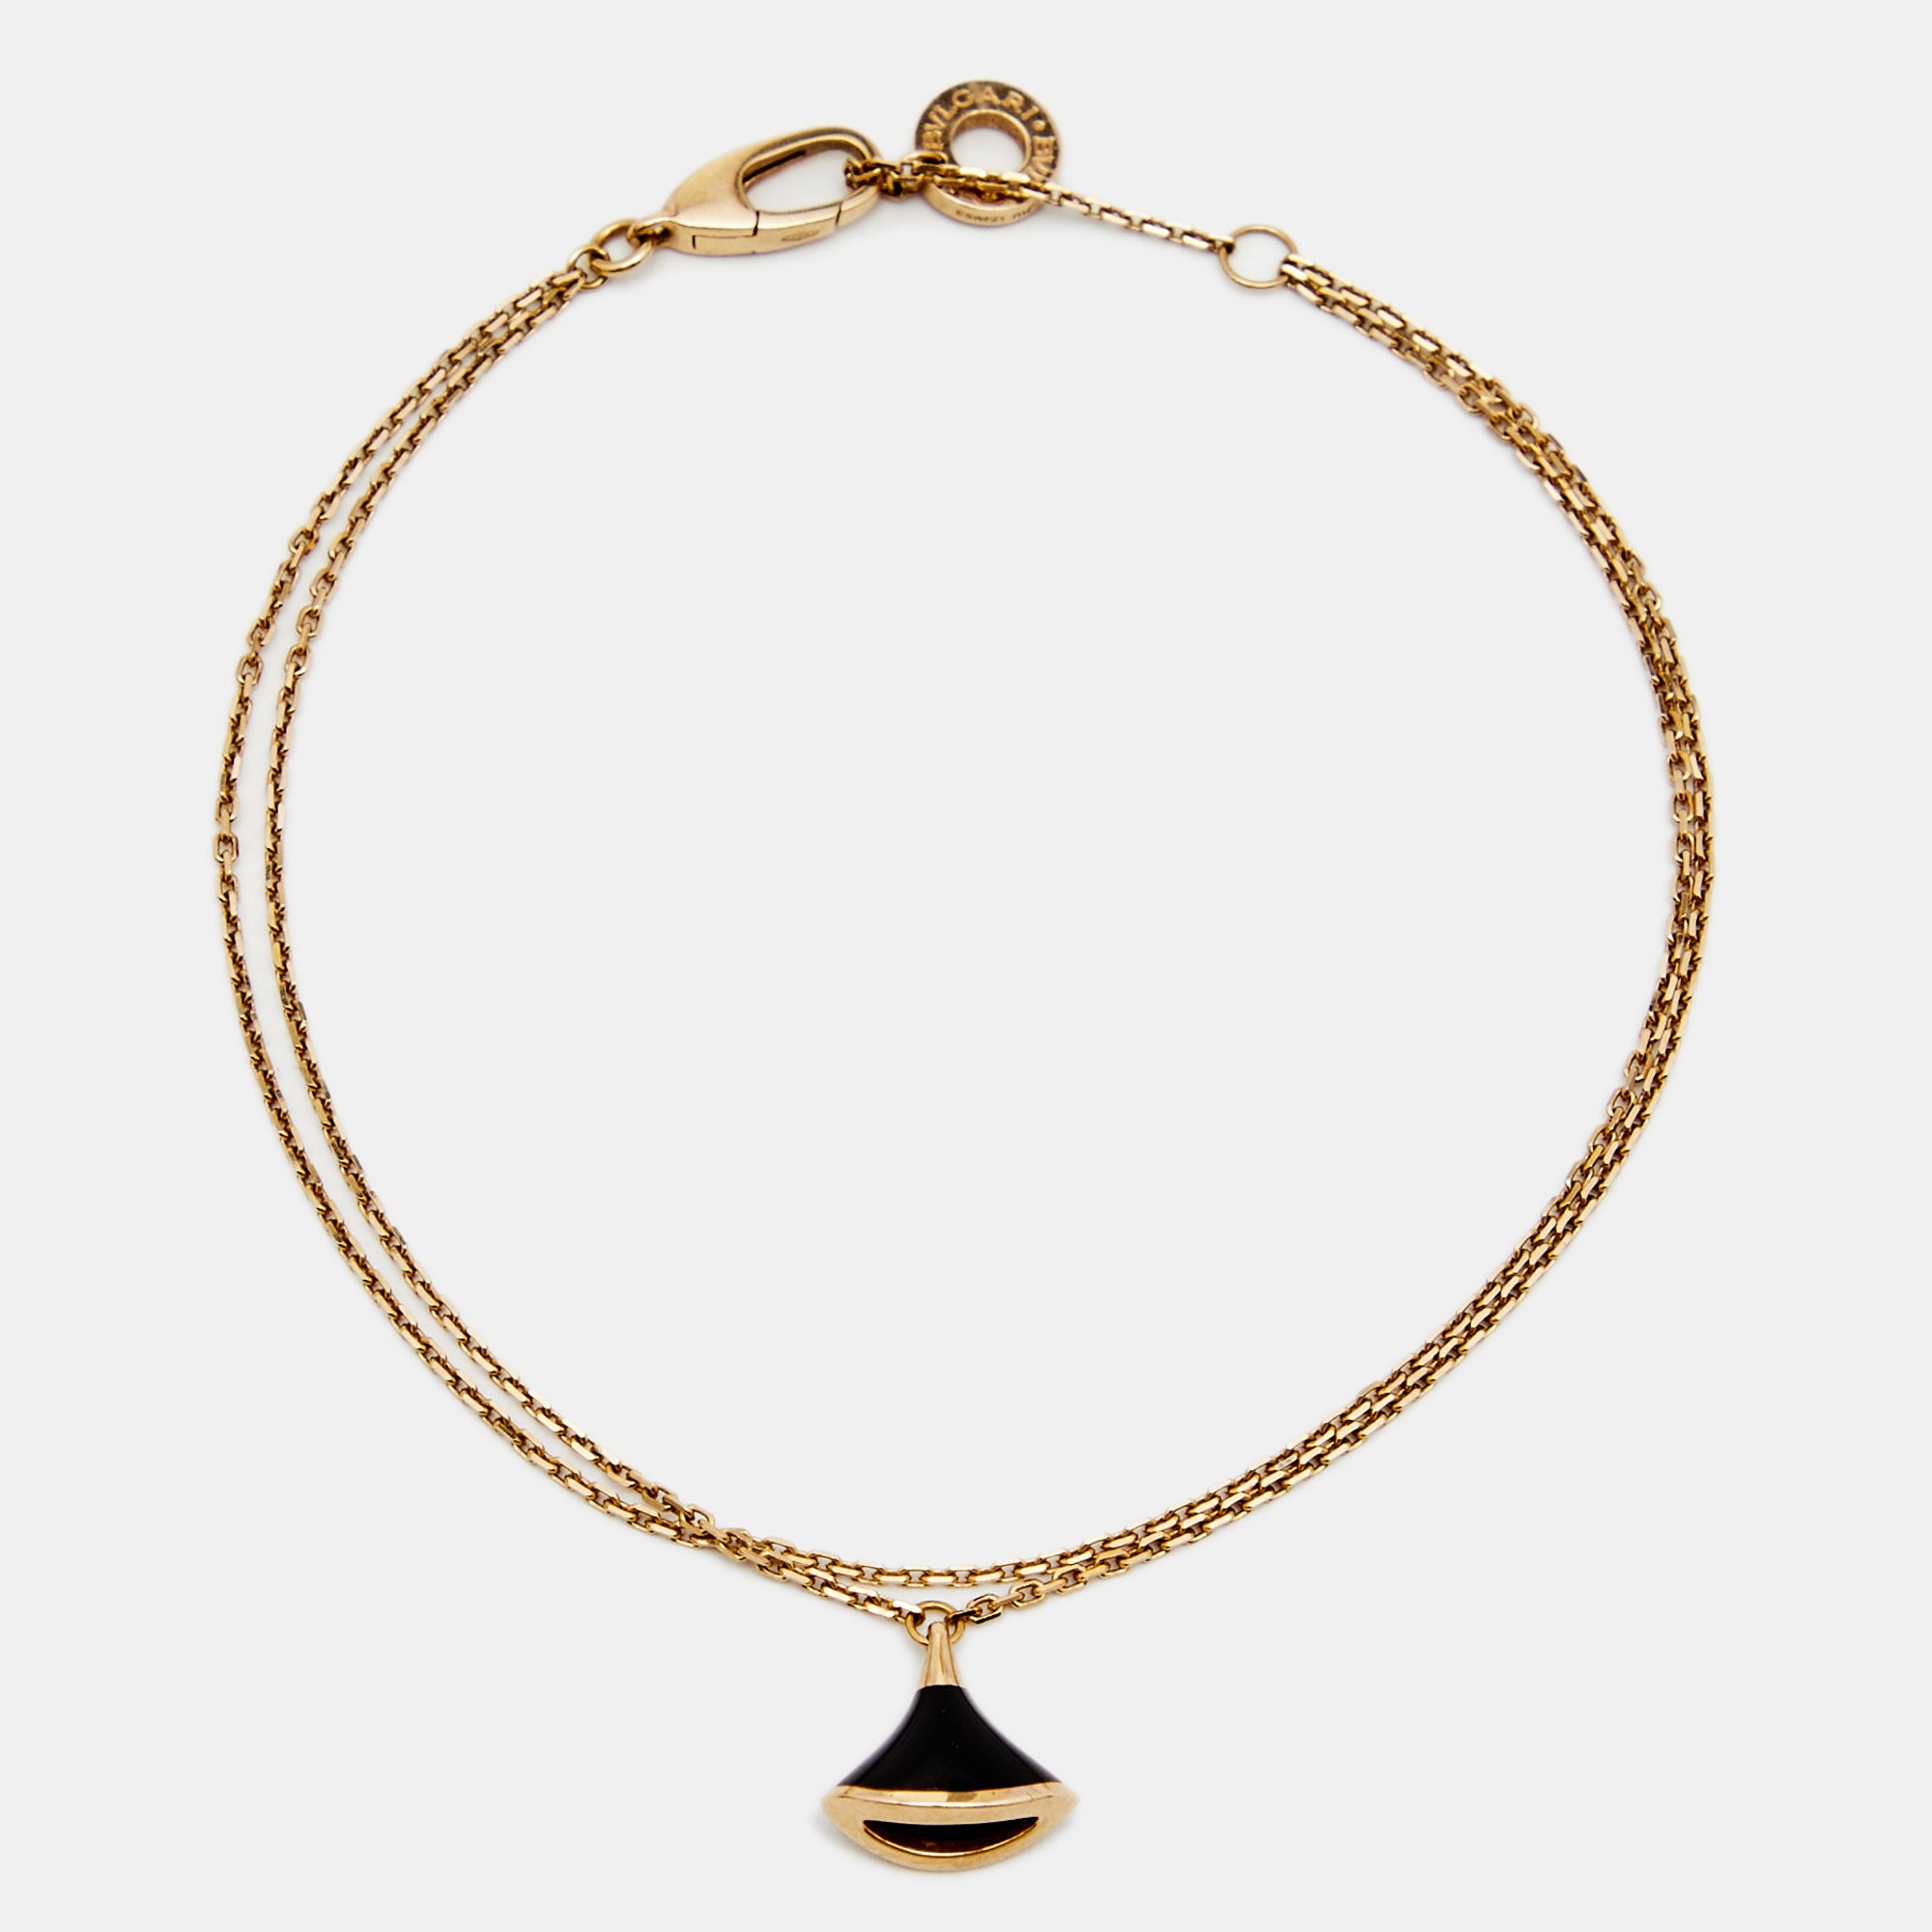 Bvlgari 18K Onyx & Page Binder Charm Bracelet - Rhodium-Plated 18K White  Gold Charm, Bracelets - BUL54111 | The RealReal